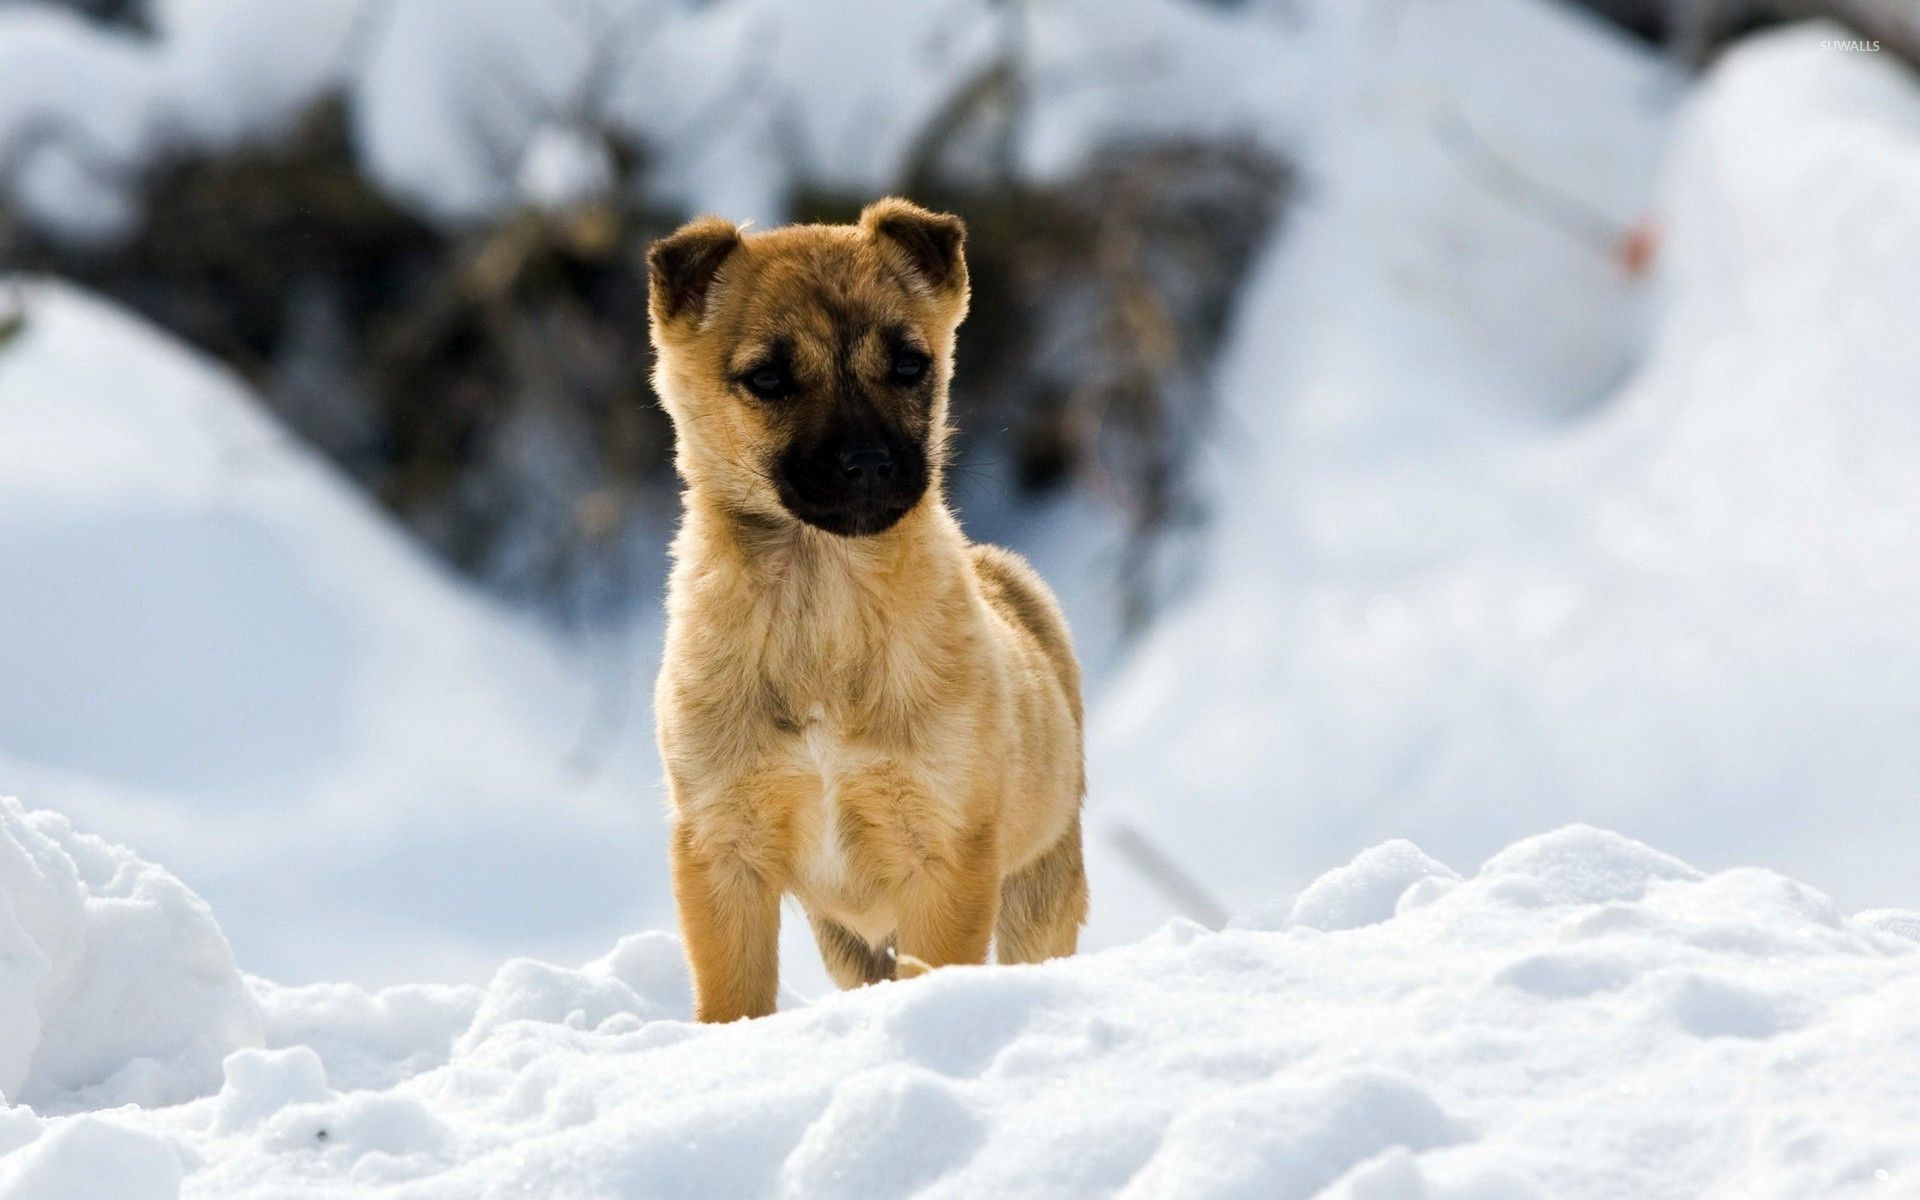 Puppy in the snow wallpaper wallpaper - Animals, Puppies, Snow animals